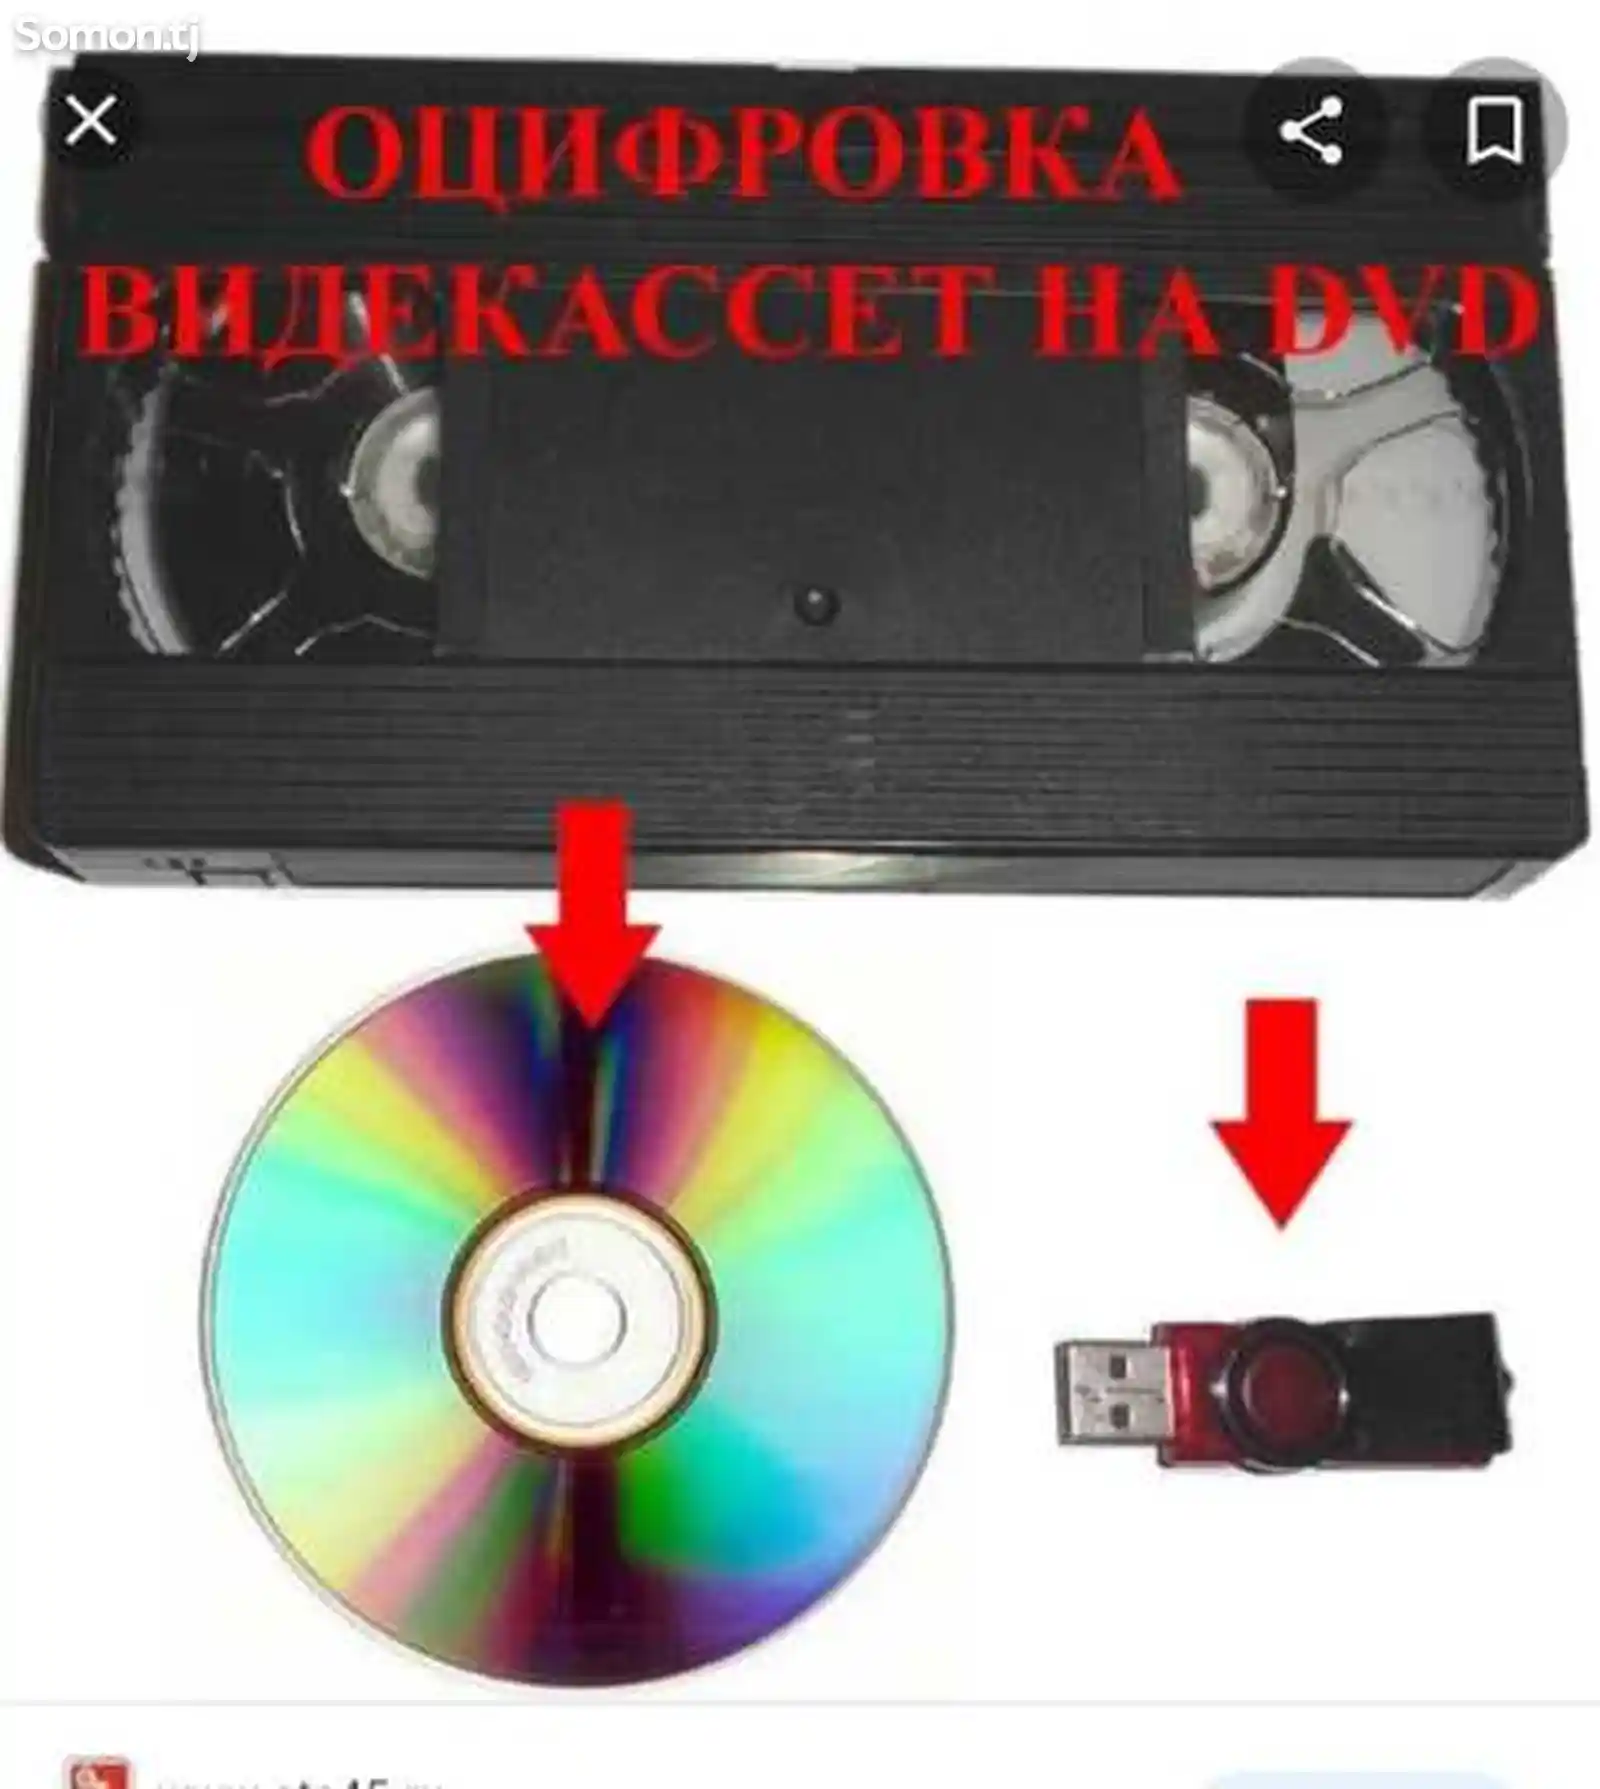 Услуги записи с видеокассеты на диск